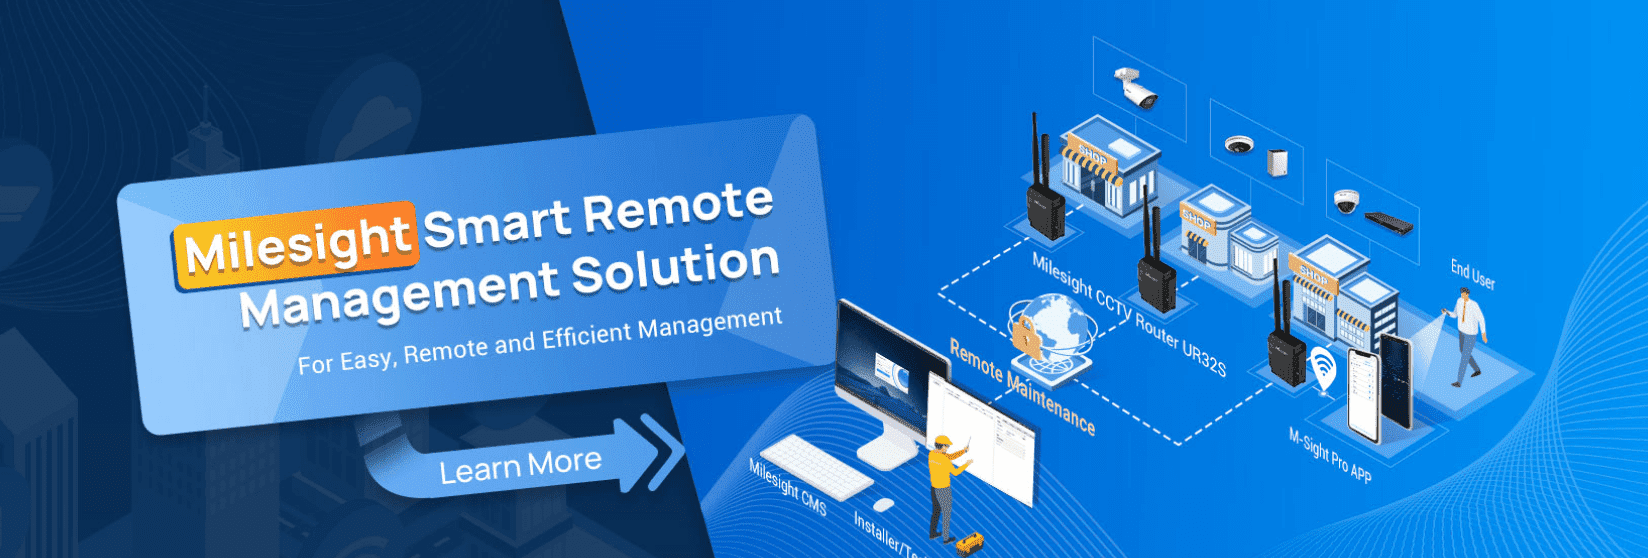 Milesight Smart Remote Management Solution